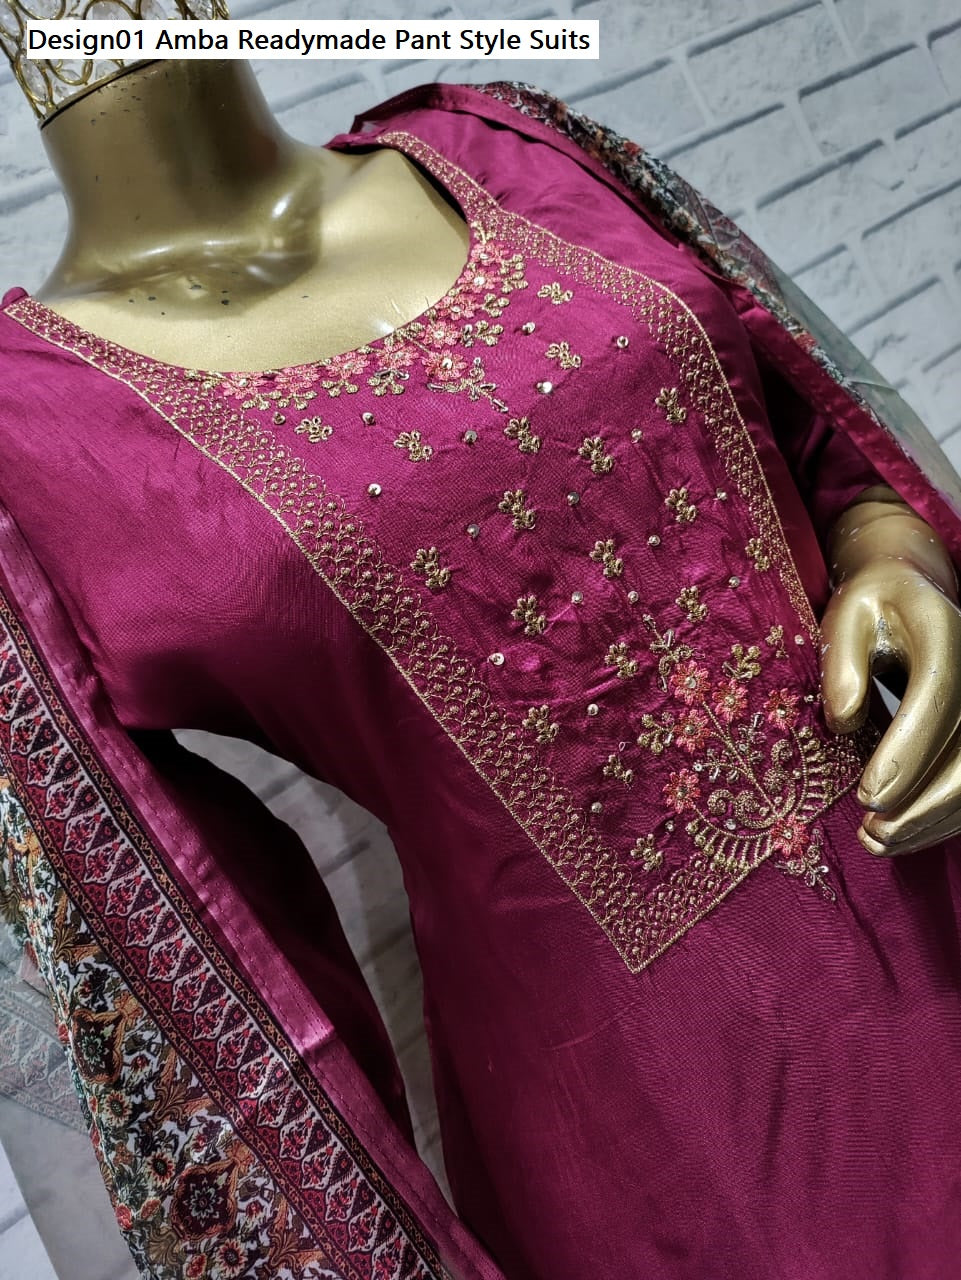 Design01 Amba Russian Silk Readymade Pant Style Suits Manufacturer Gujarat